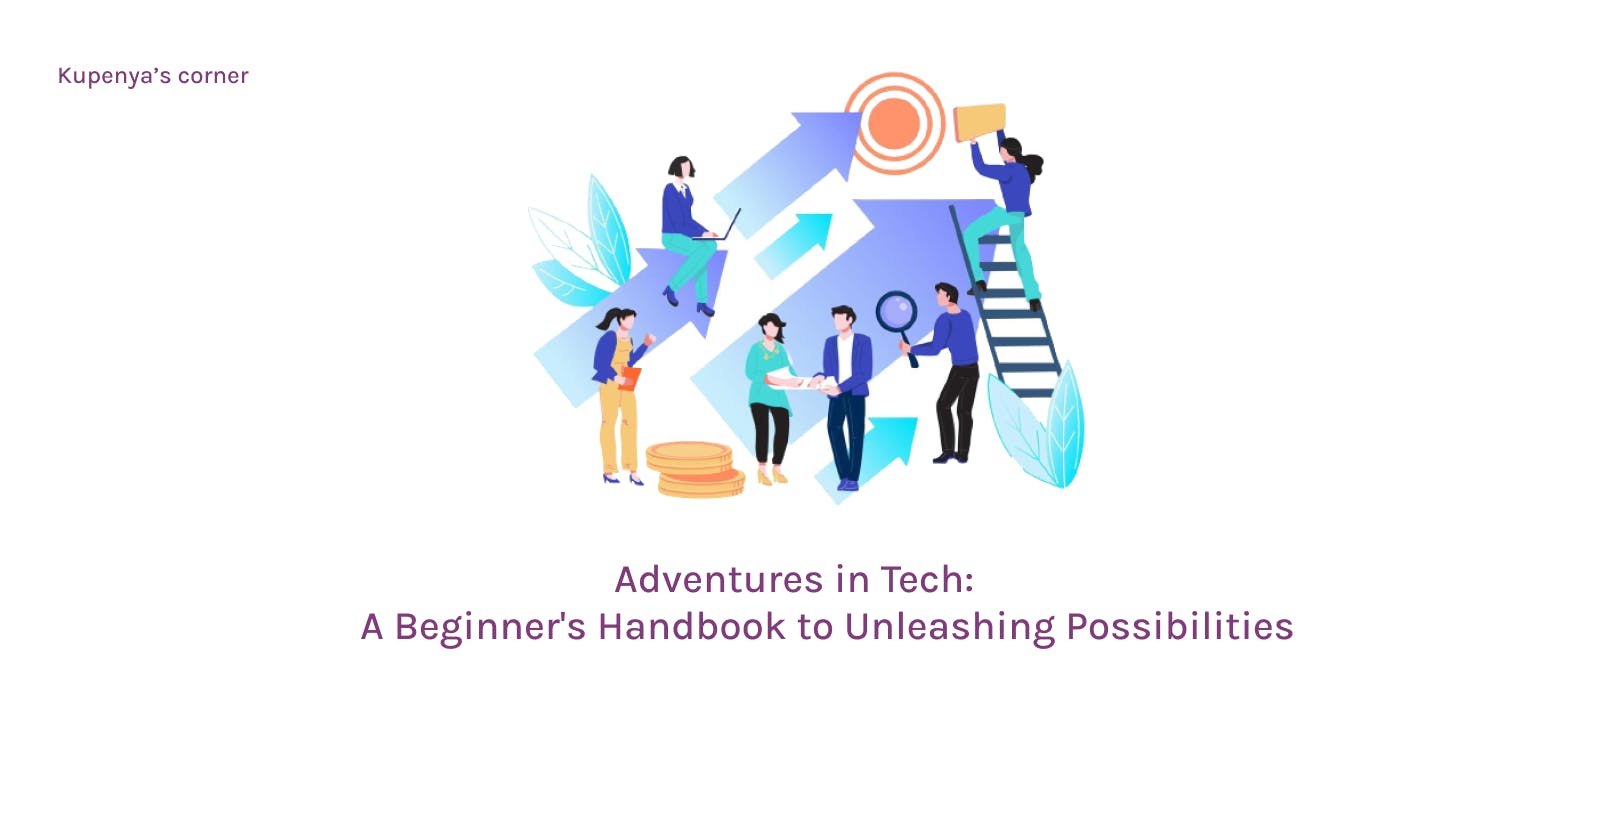 Adventures in Tech: A Beginner's Handbook to Unleashing Possibilities